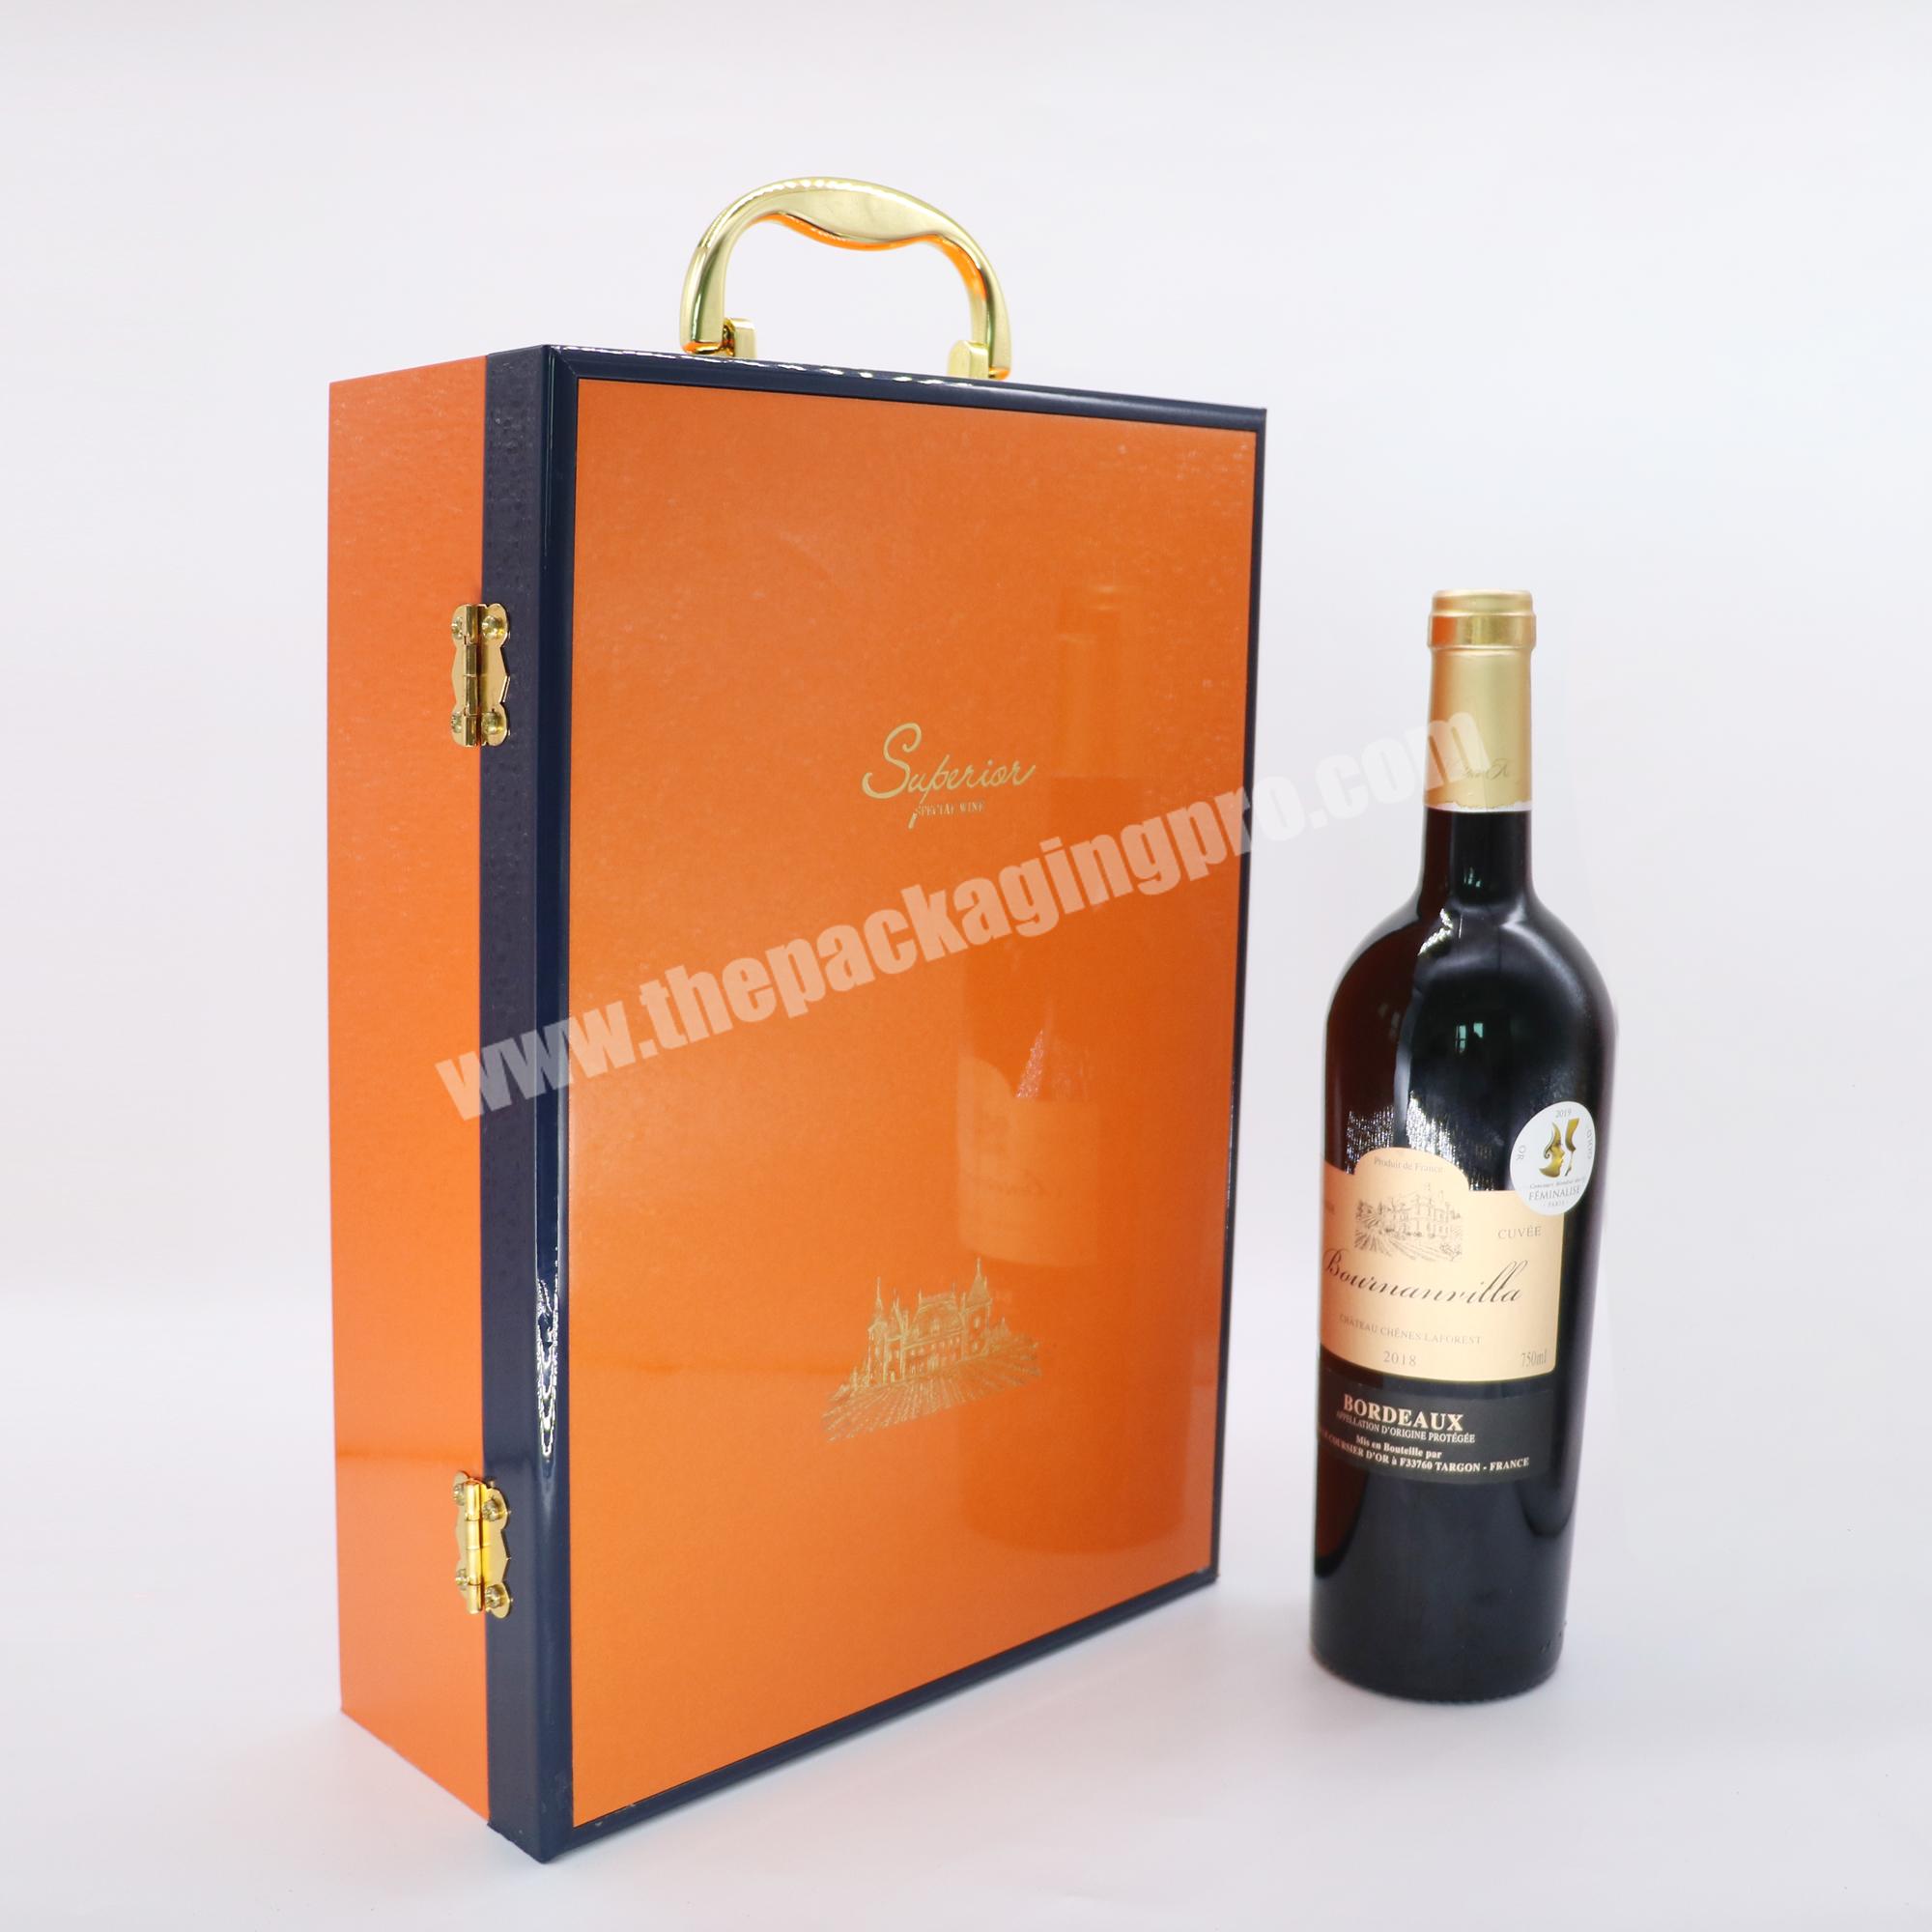 Wooden wine bottle boxes personalized 2 bottle wine box wooden wine gift box